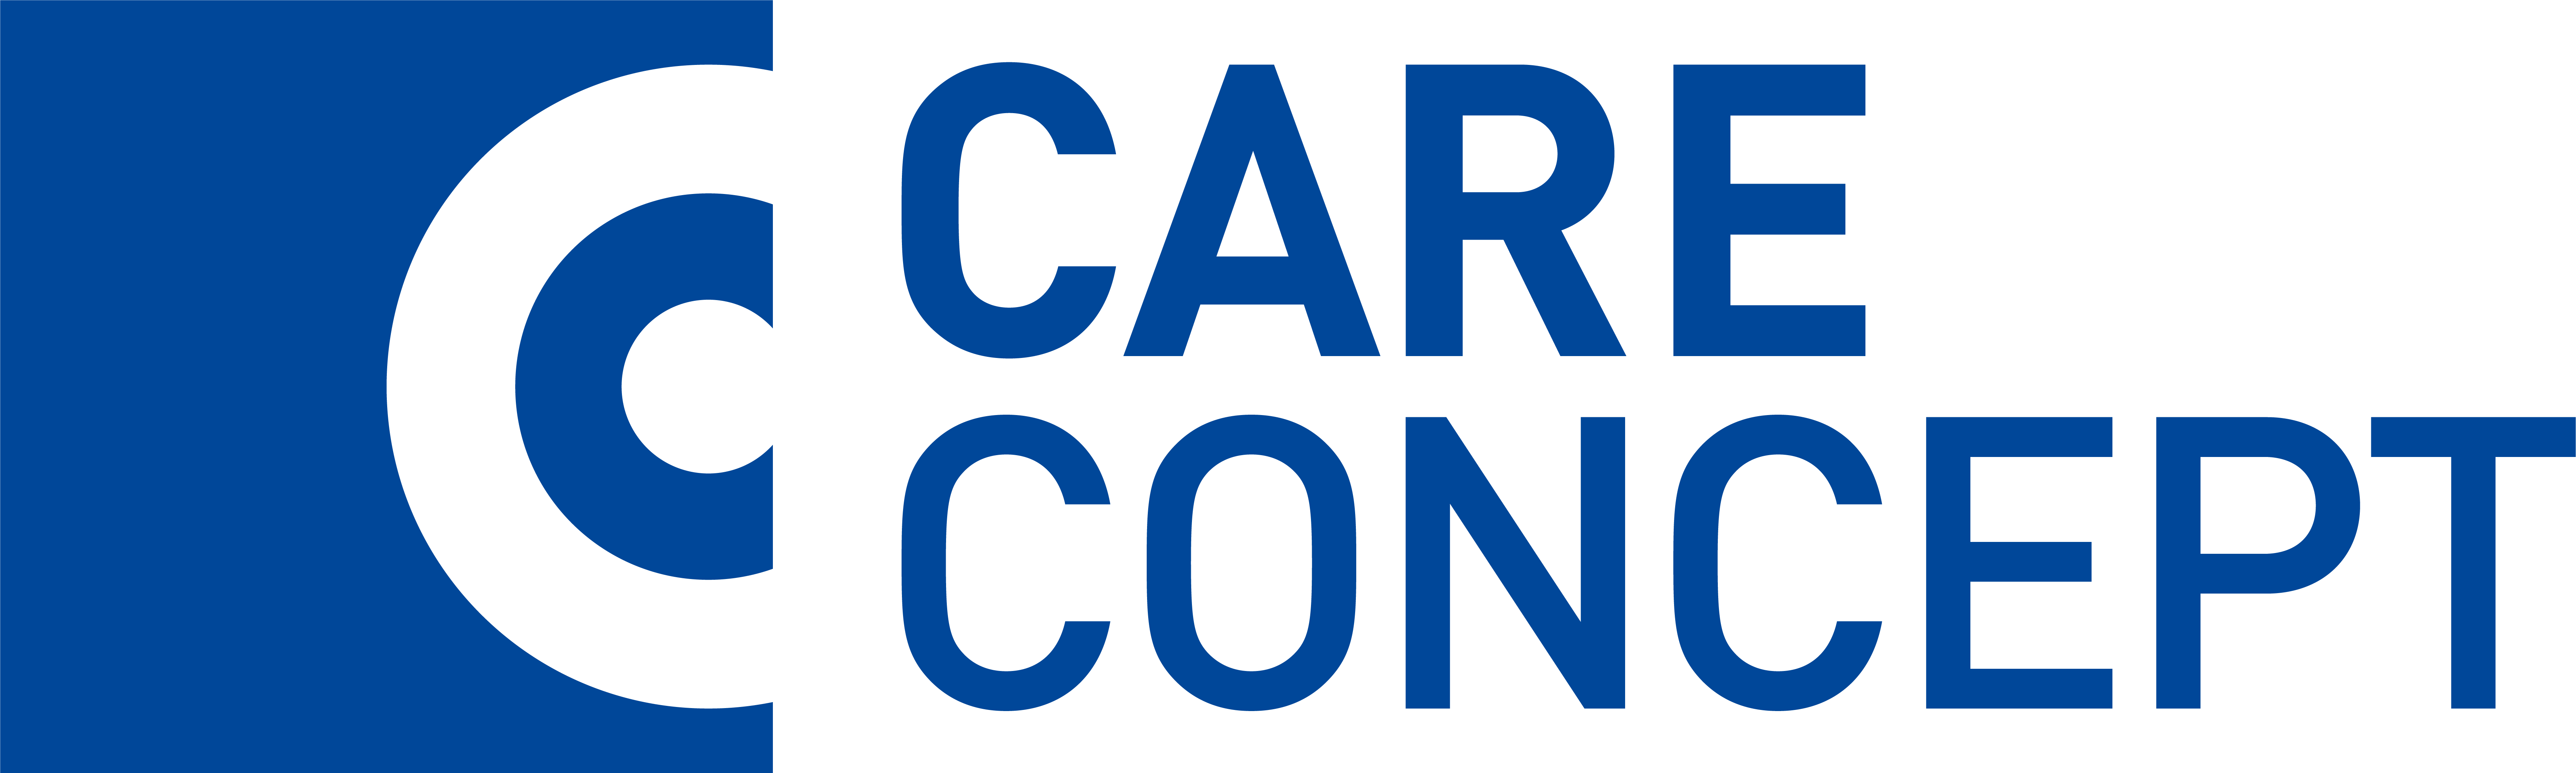 Care Concept AG